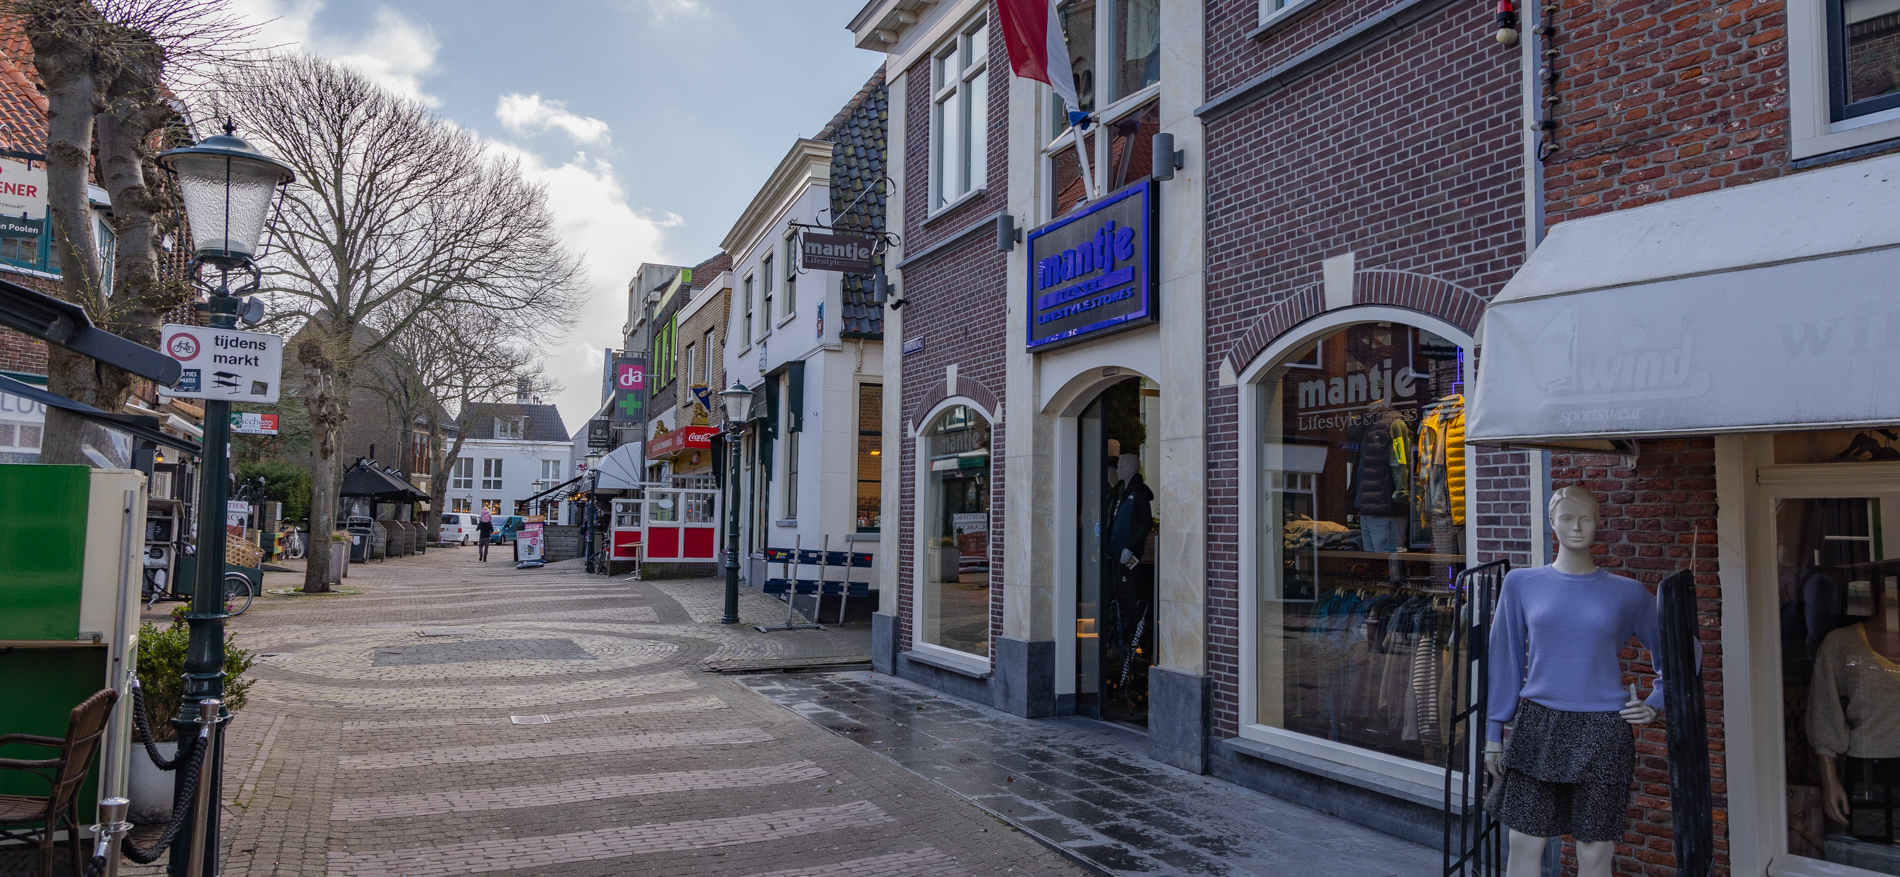 Mantje Den Burg | Texel (NL) - 